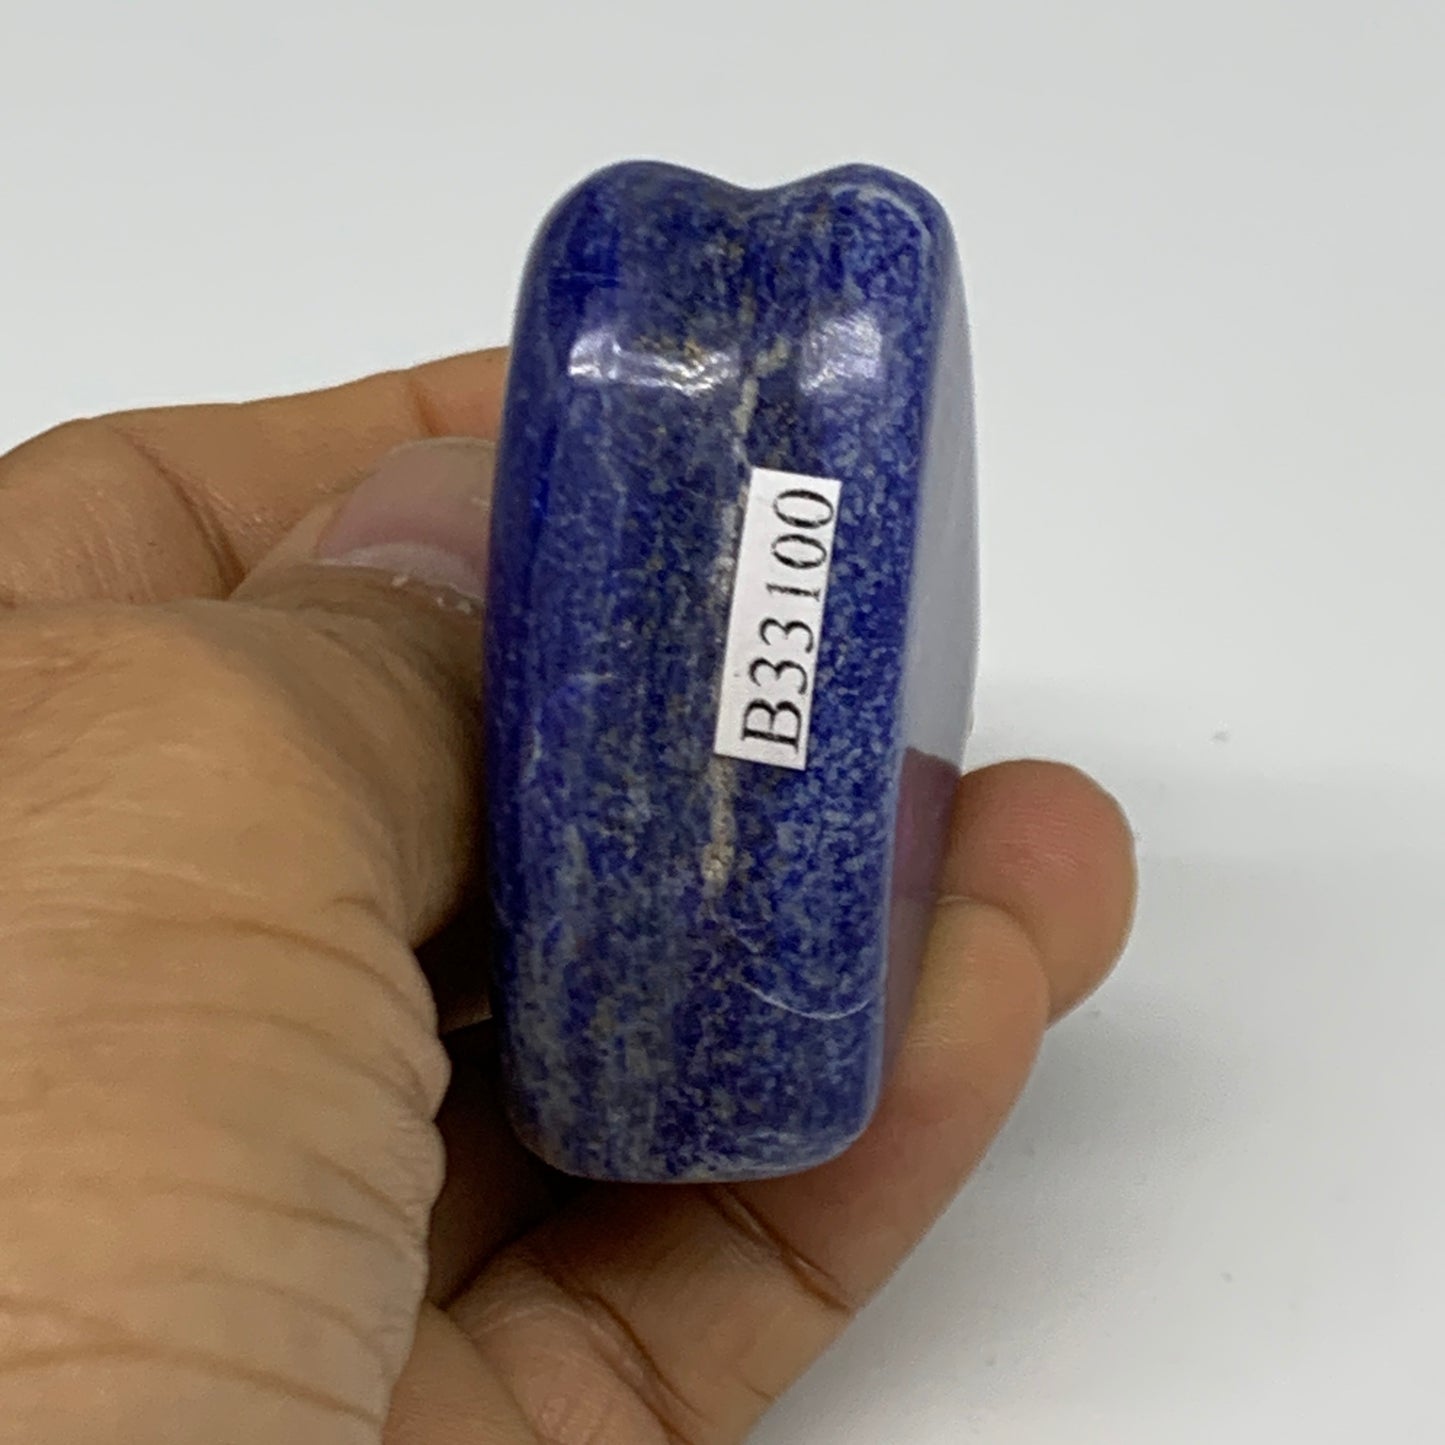 90.8g, 1.8"x1.8"x0.9",  Natural Freeform Lapis Lazuli from Afghanistan, B33100